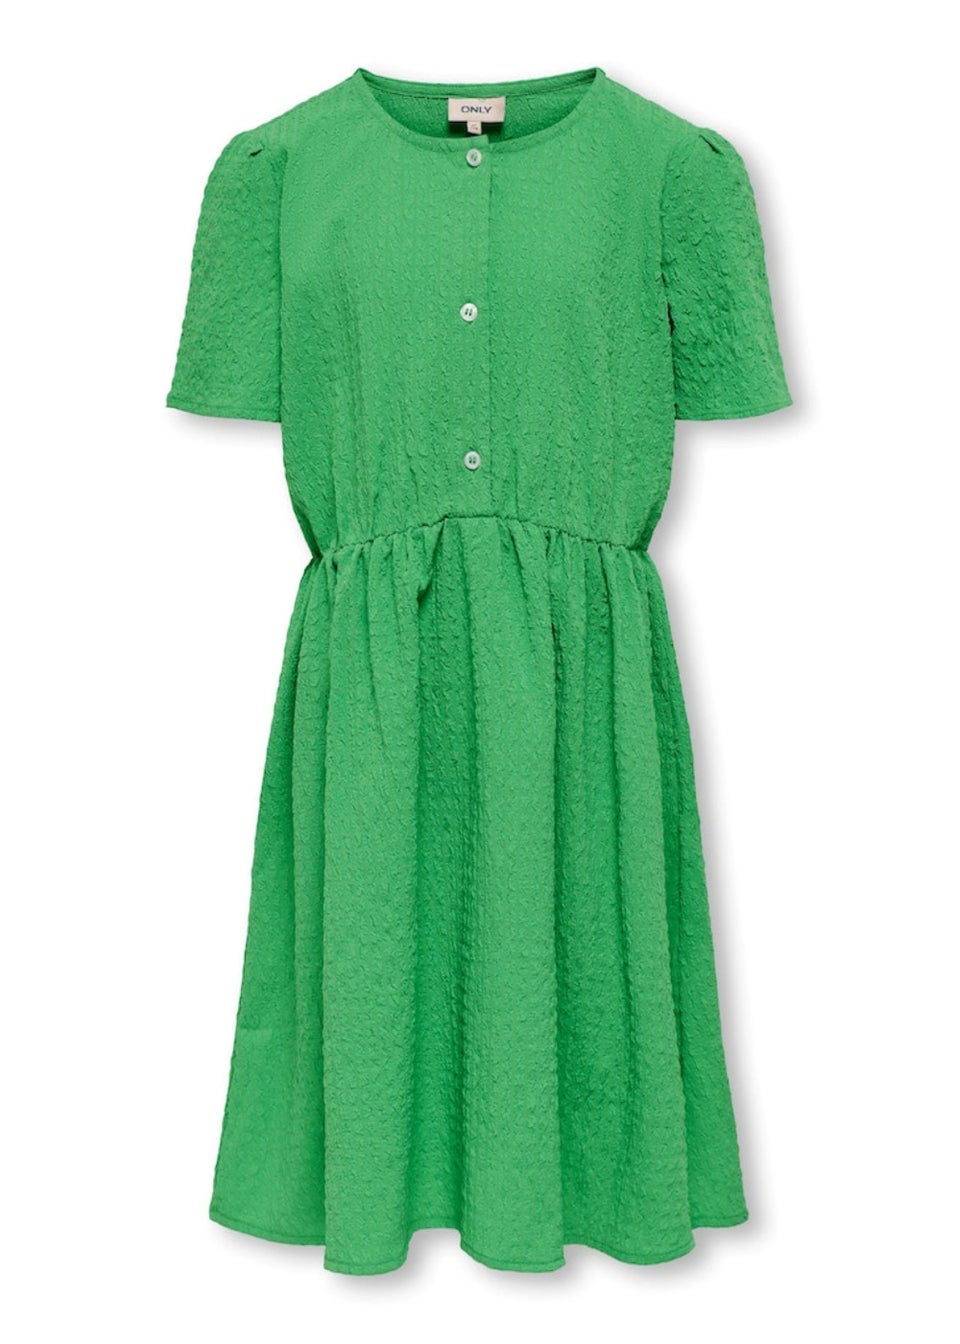 ONLY Kids Green Dress (6-14yrs)